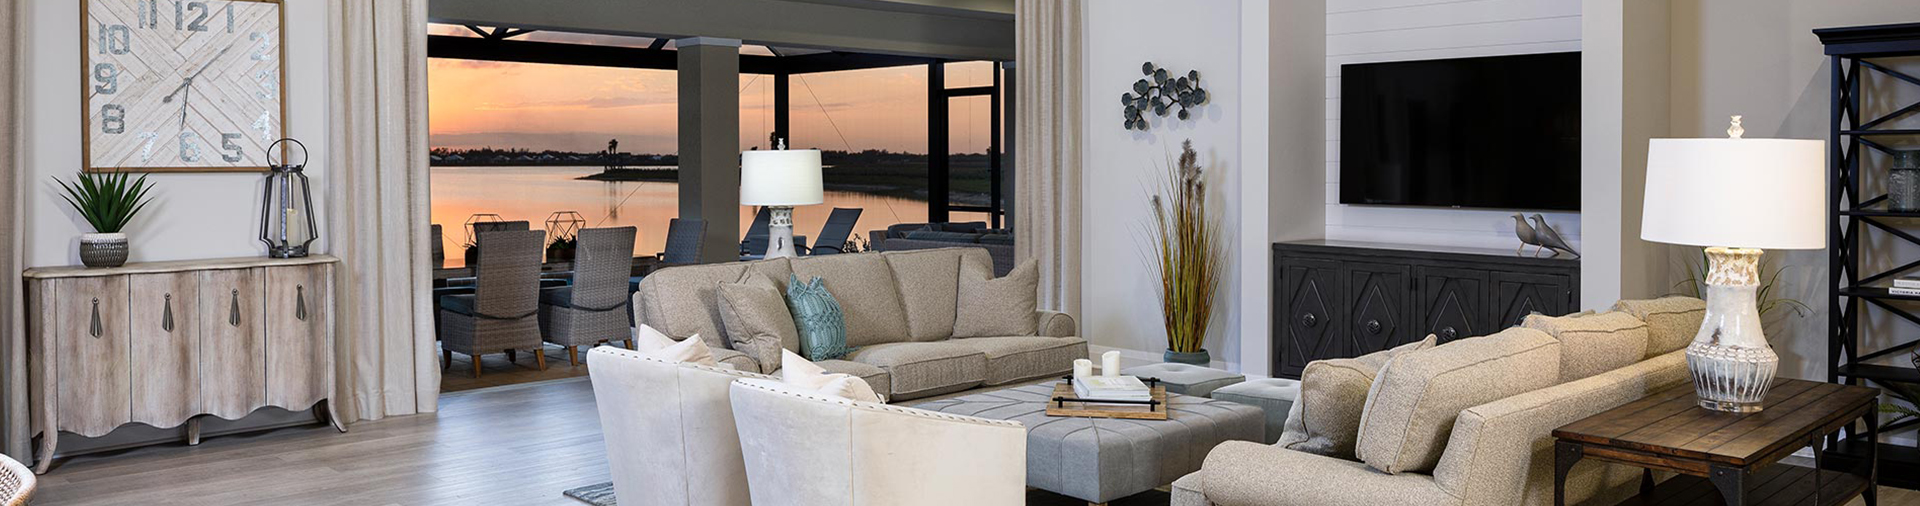 Living Room of custom built home with sliding glass doors open at sunset